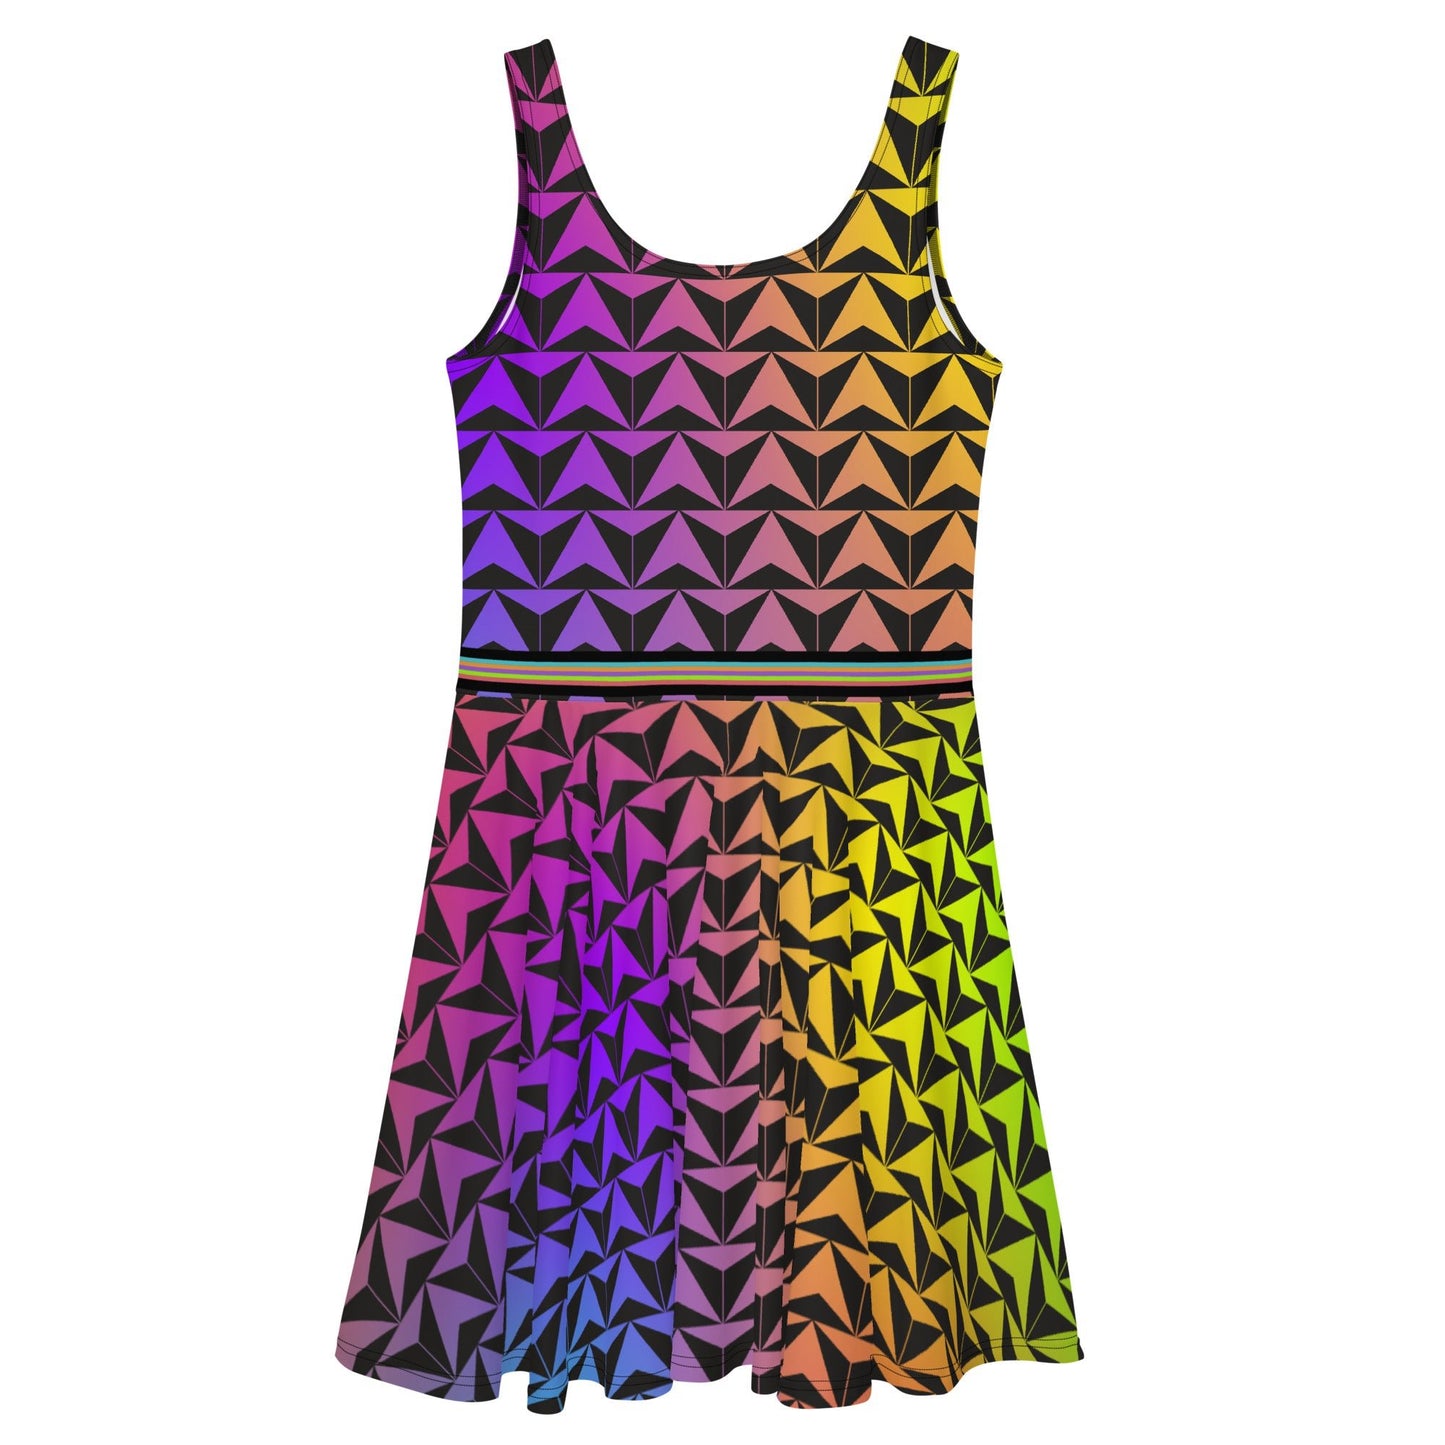 Spaceship Inspired Neon World Skater Dress- Cosplay, Bounding, Costume cosplaydisney adultdisney dress#tag4##tag5##tag6#